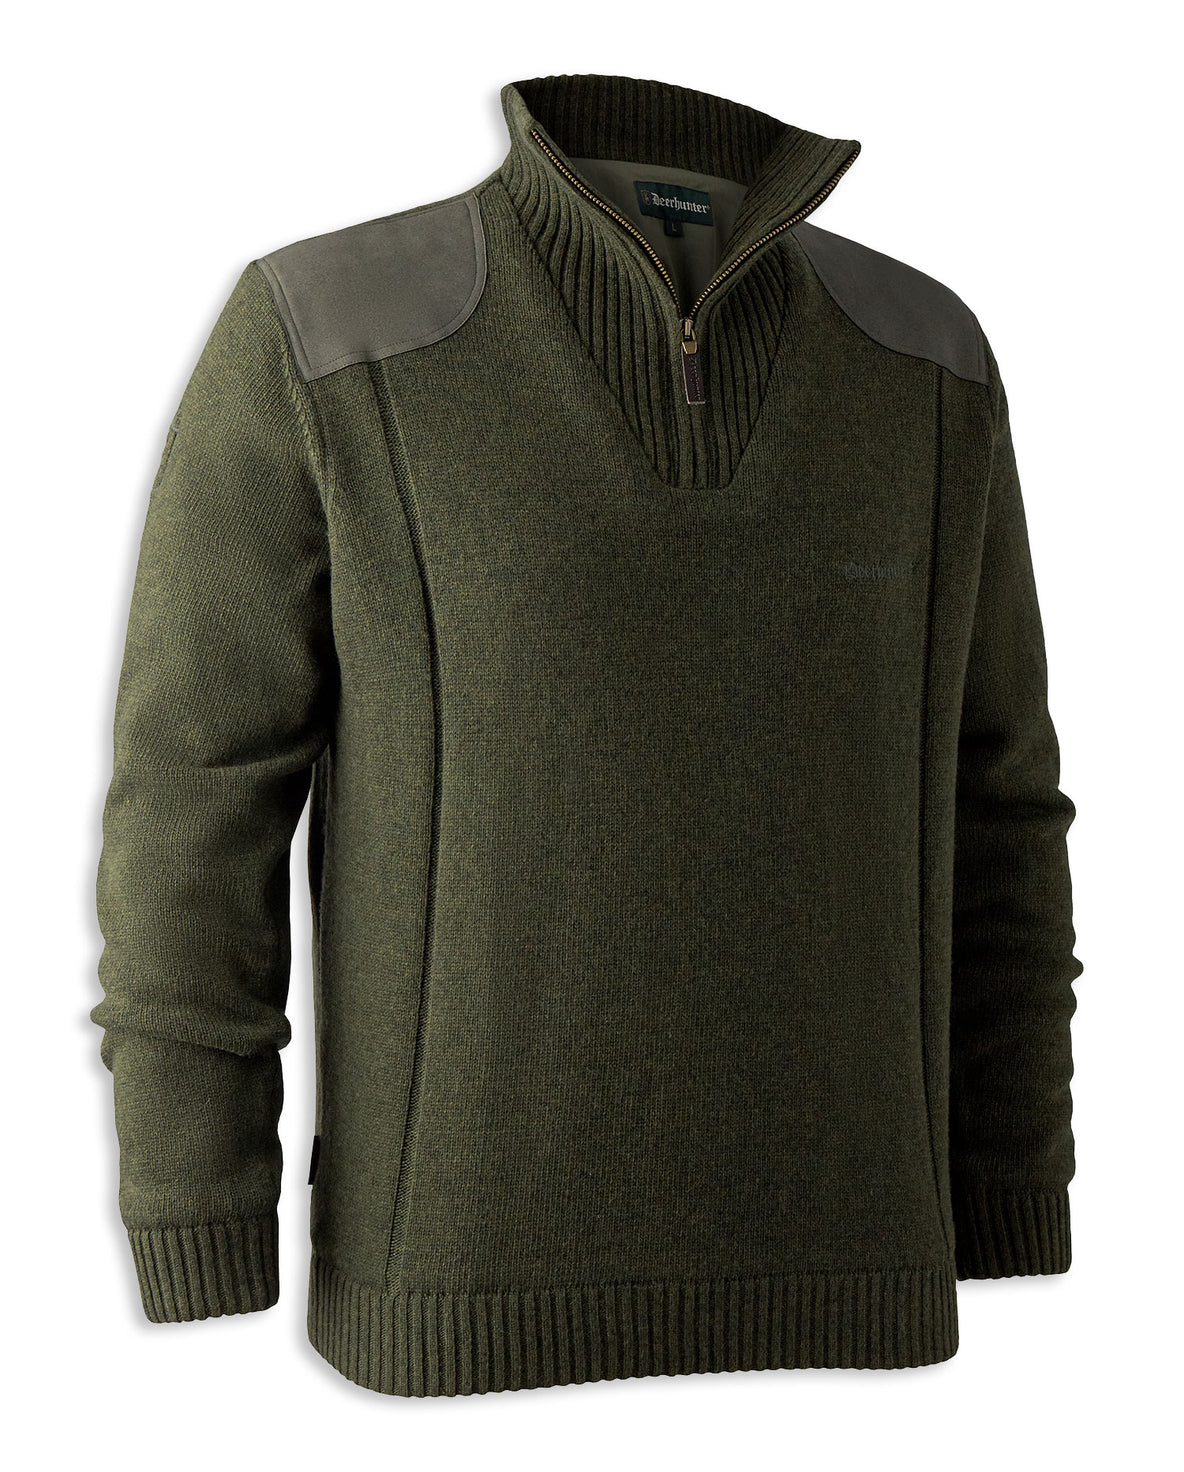 Green Melange Deerhunter Carlisle Knit with Stormliner Zip Neck Sweater 